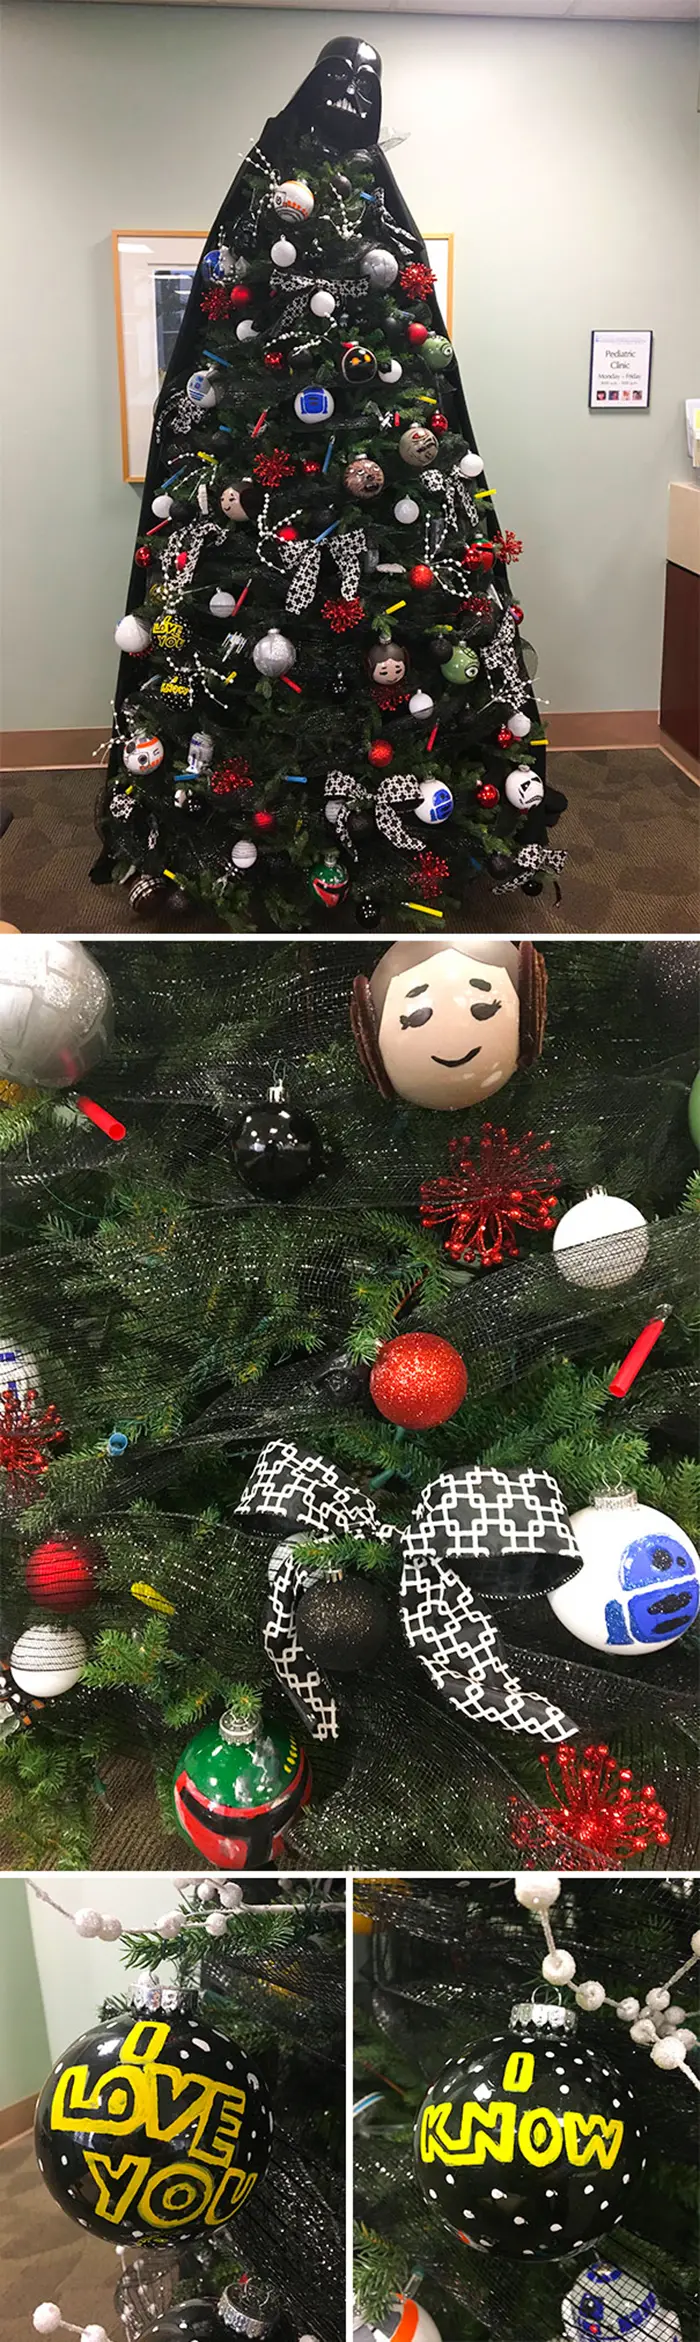 diy holiday trees star wars